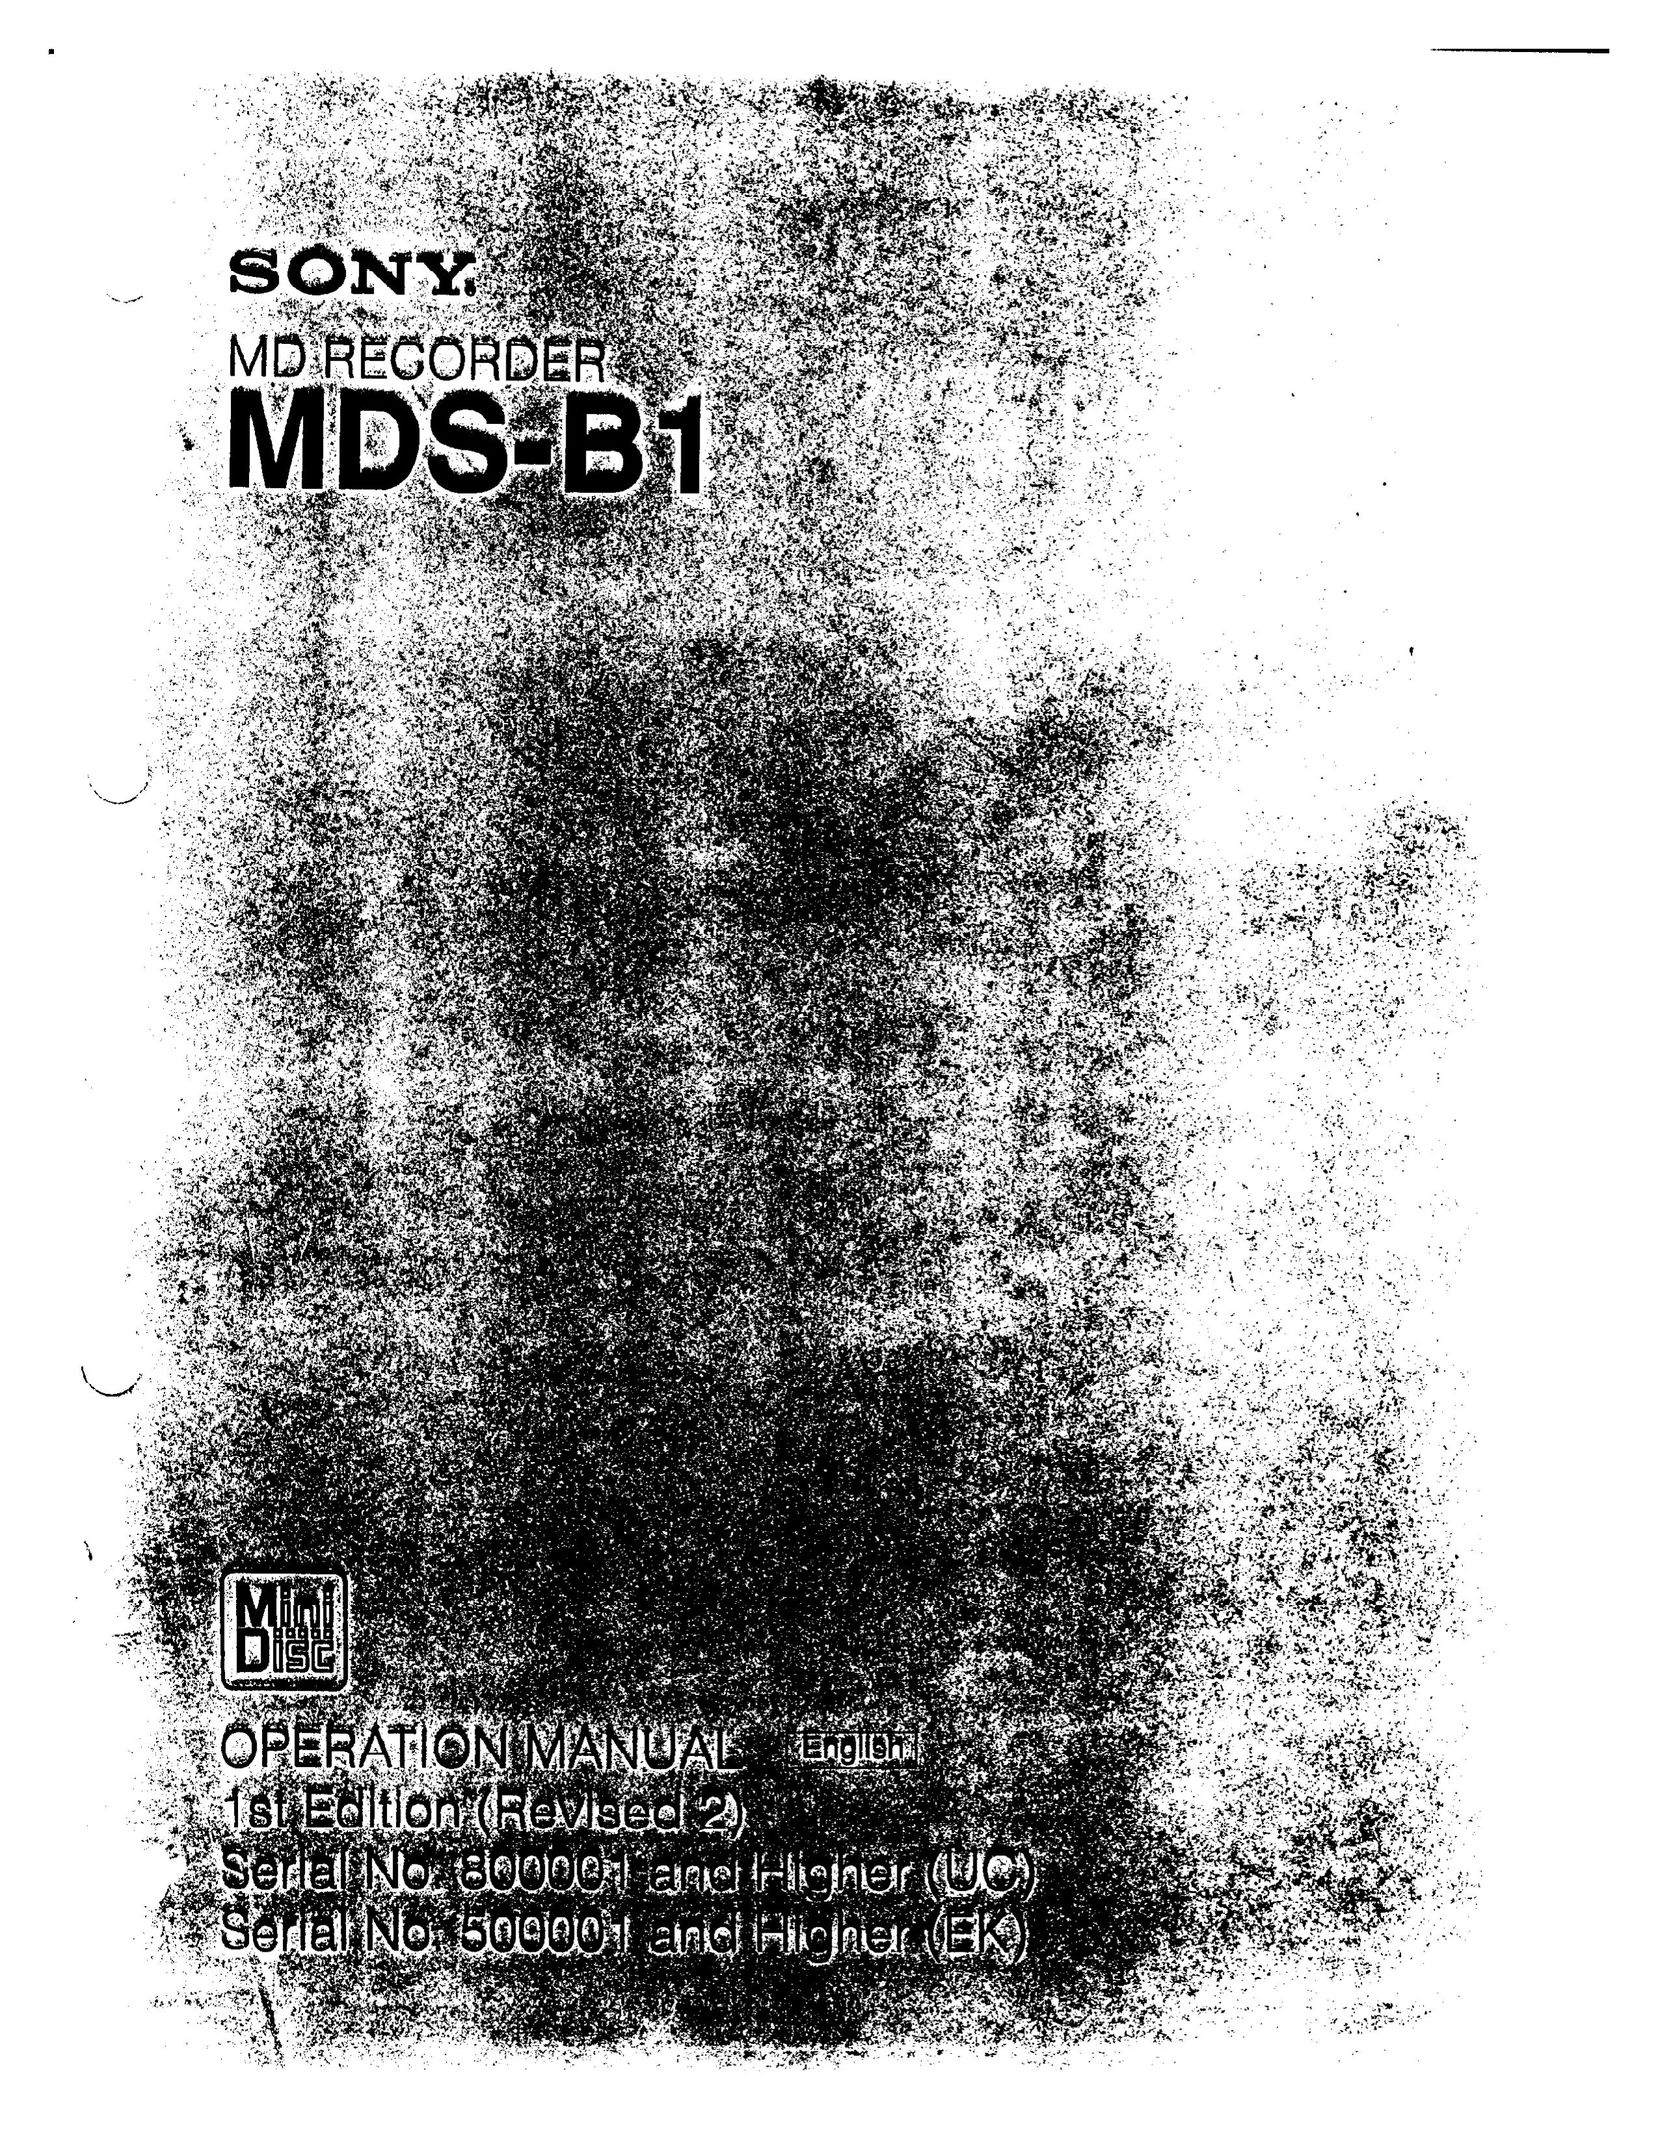 Sony MDS-B1 MiniDisc Player User Manual